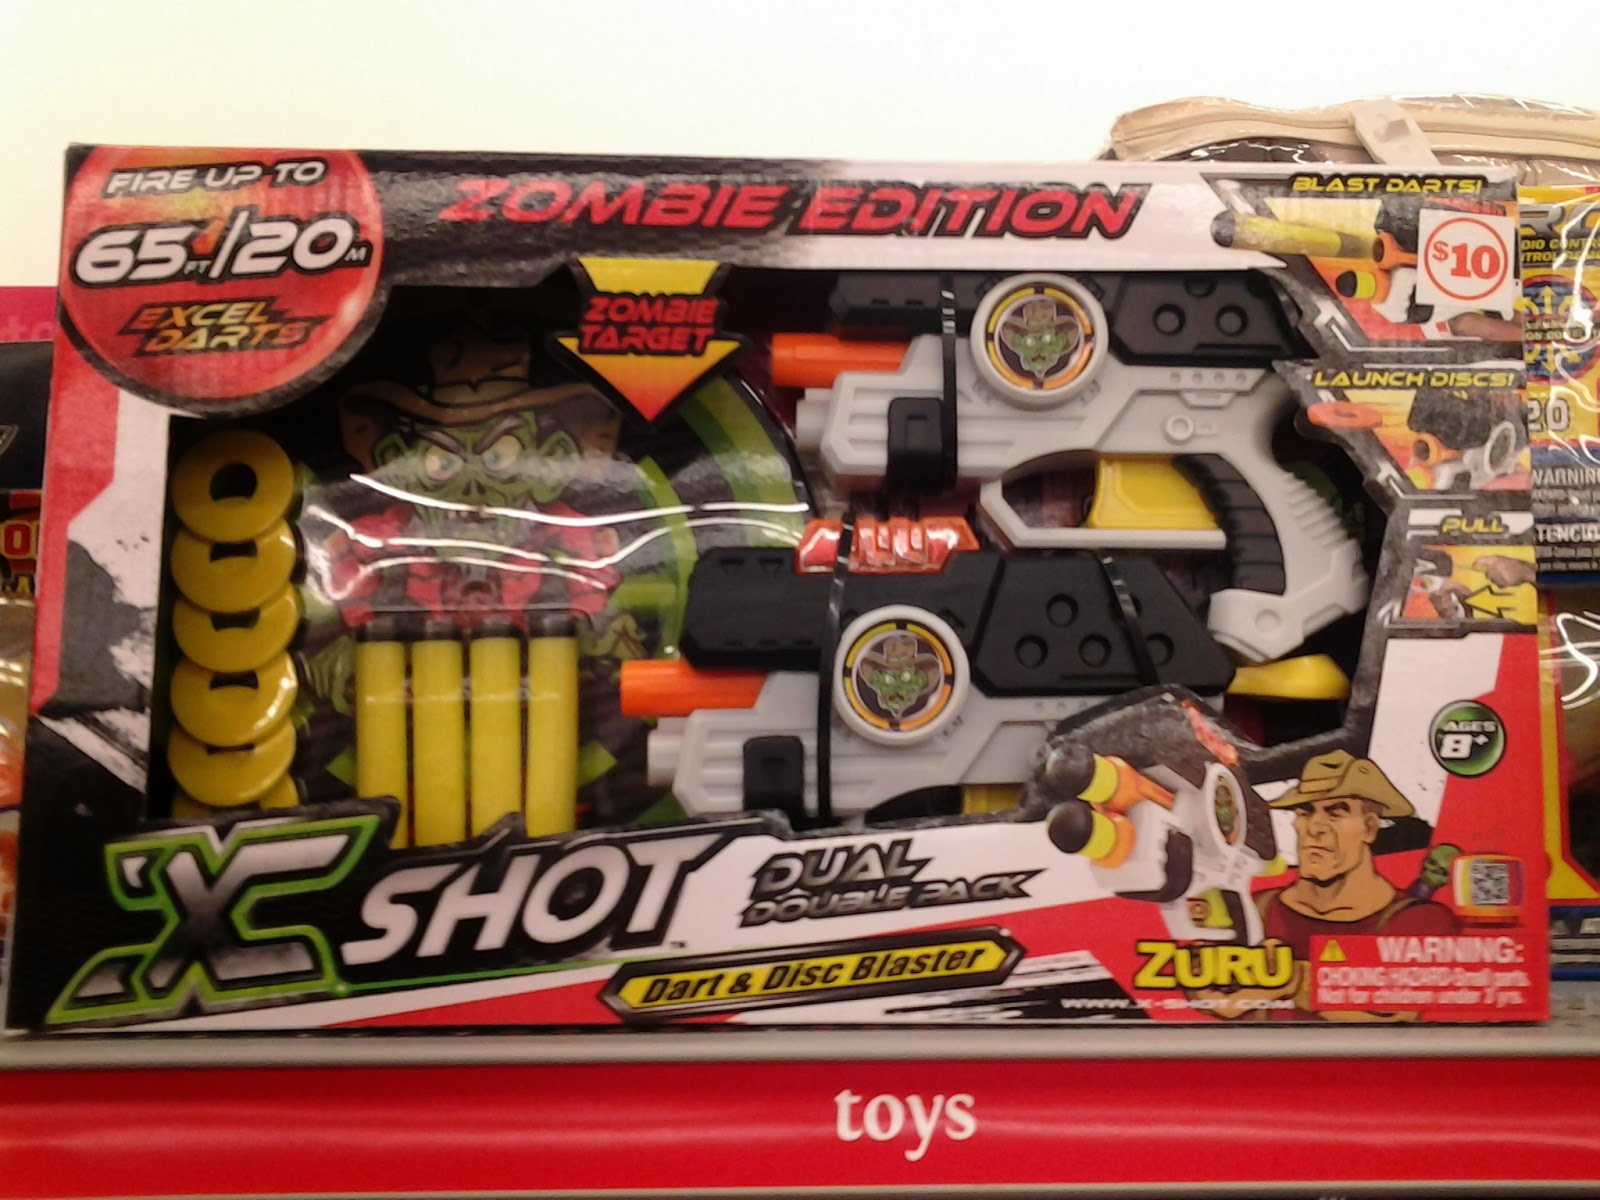 X-Shot Zombie Edition Blasters! 